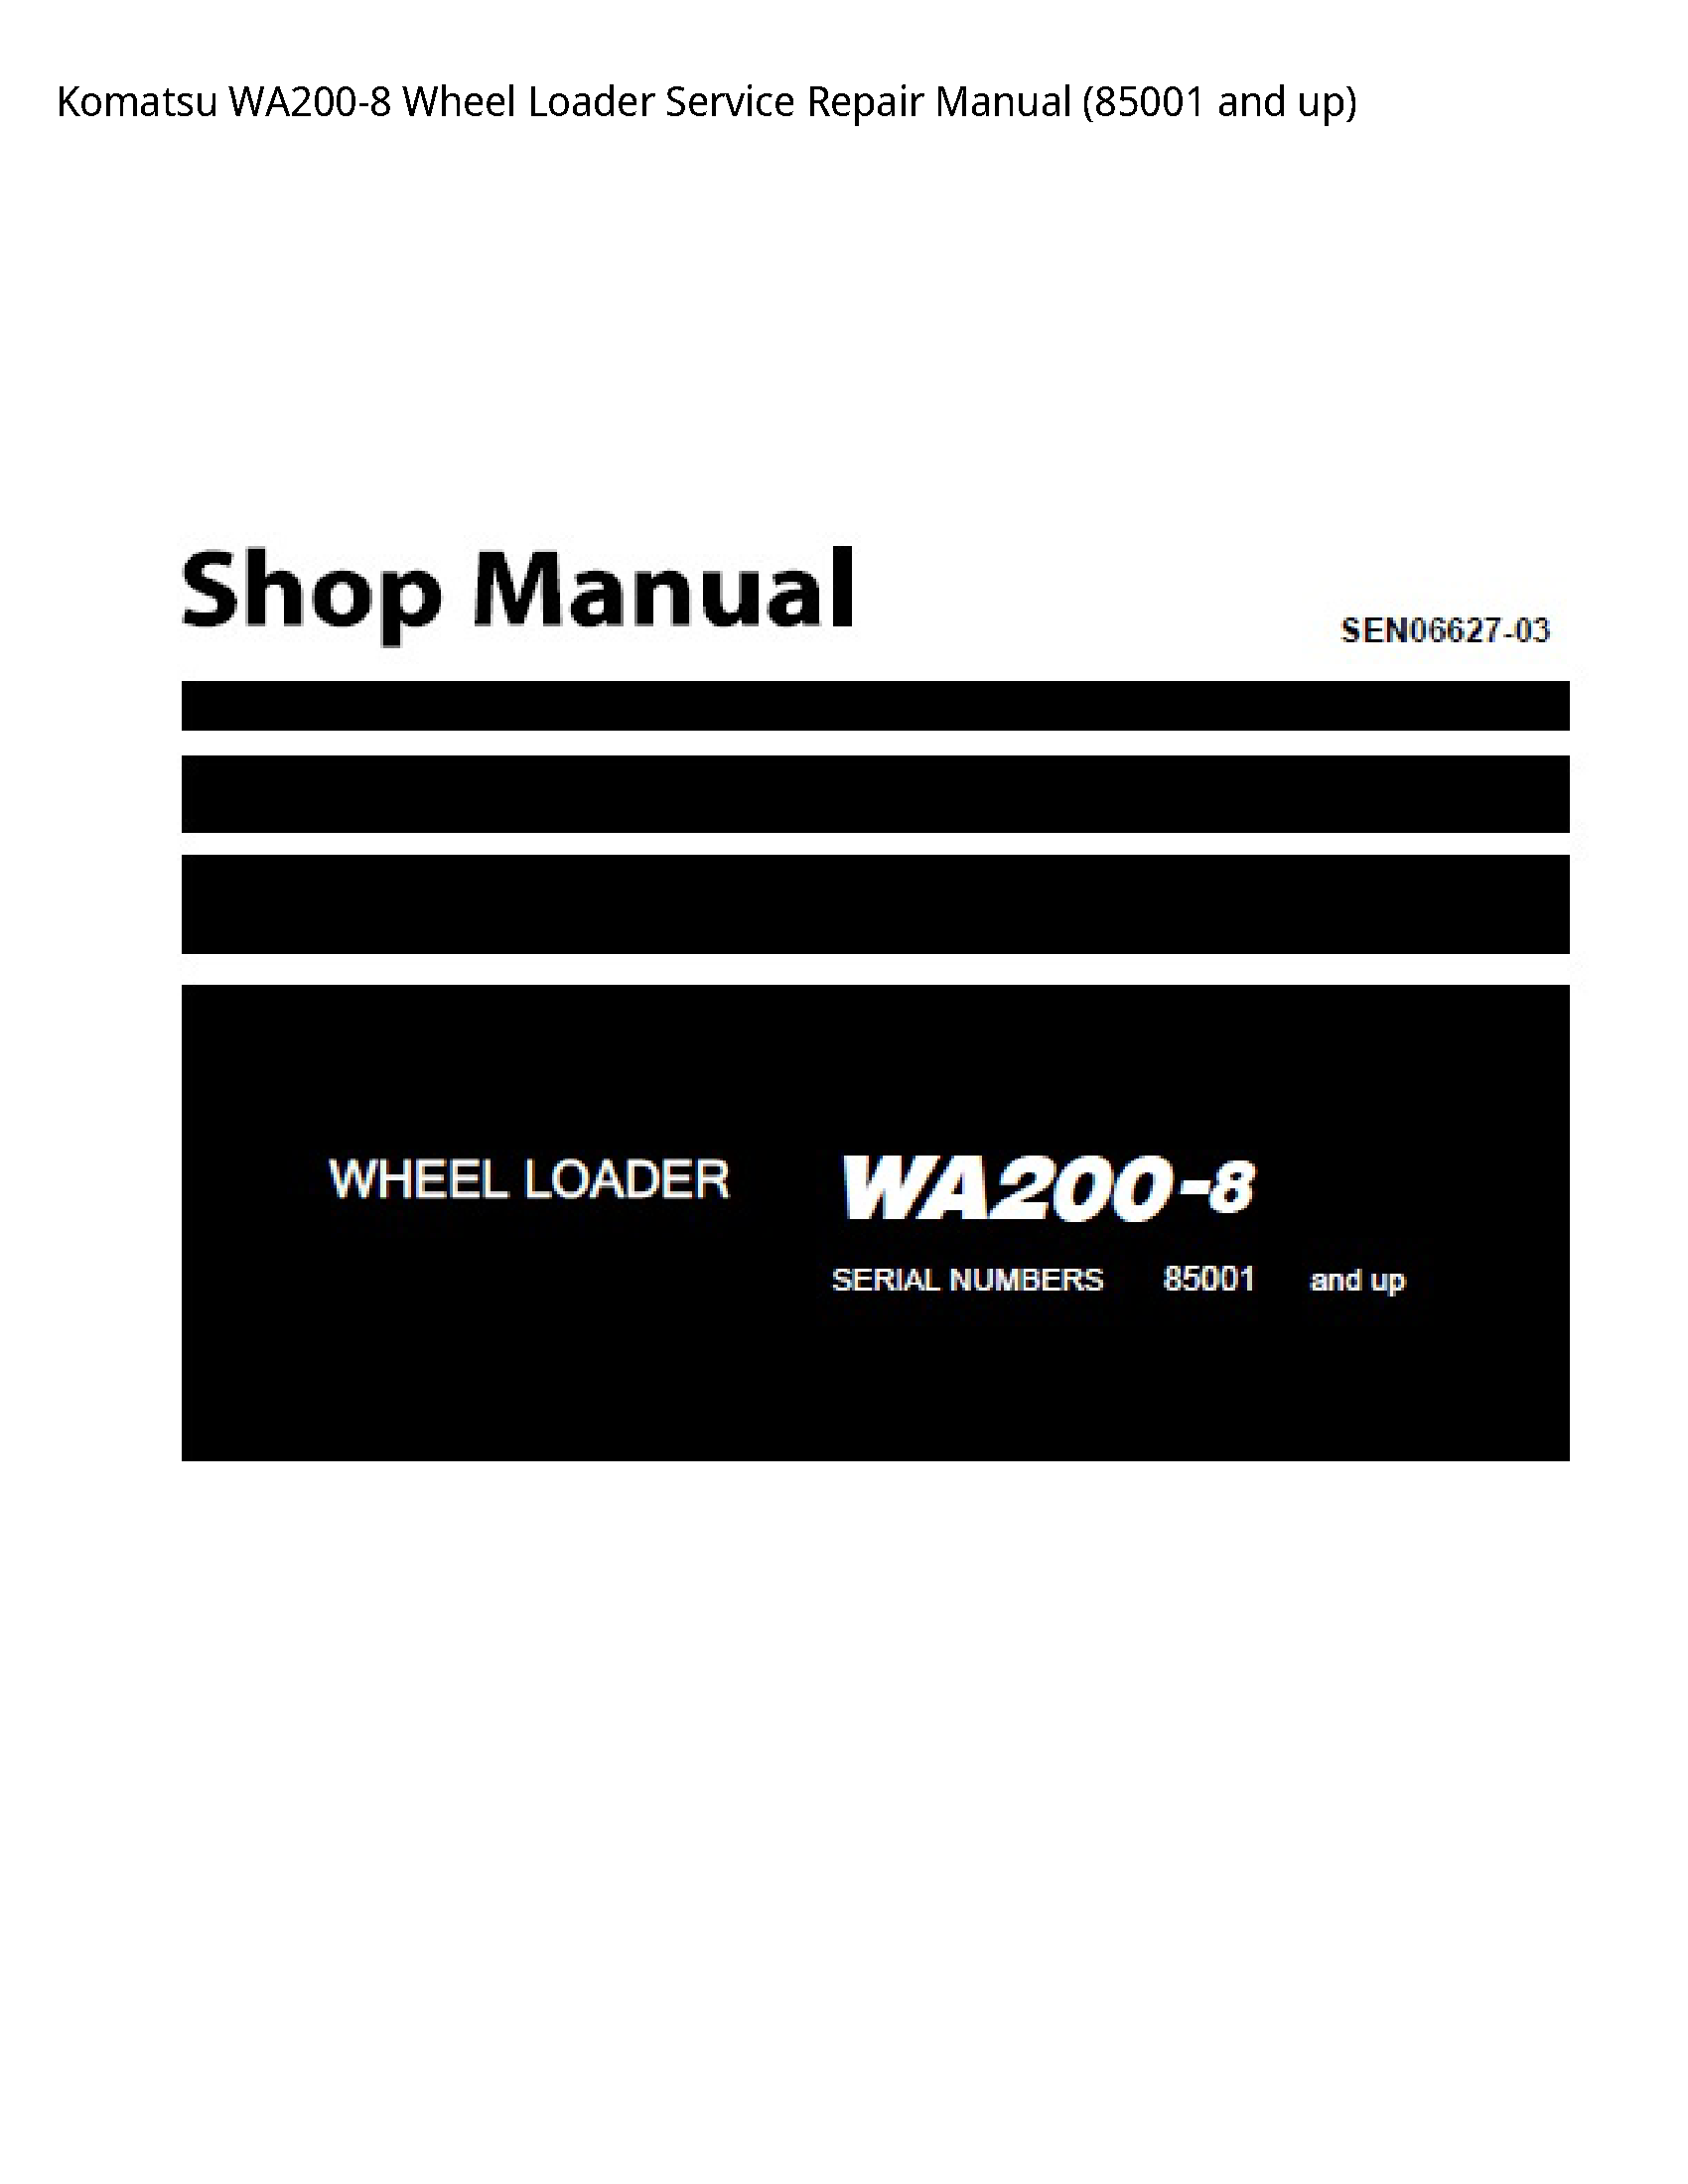 KOMATSU WA200-8 Wheel Loader manual